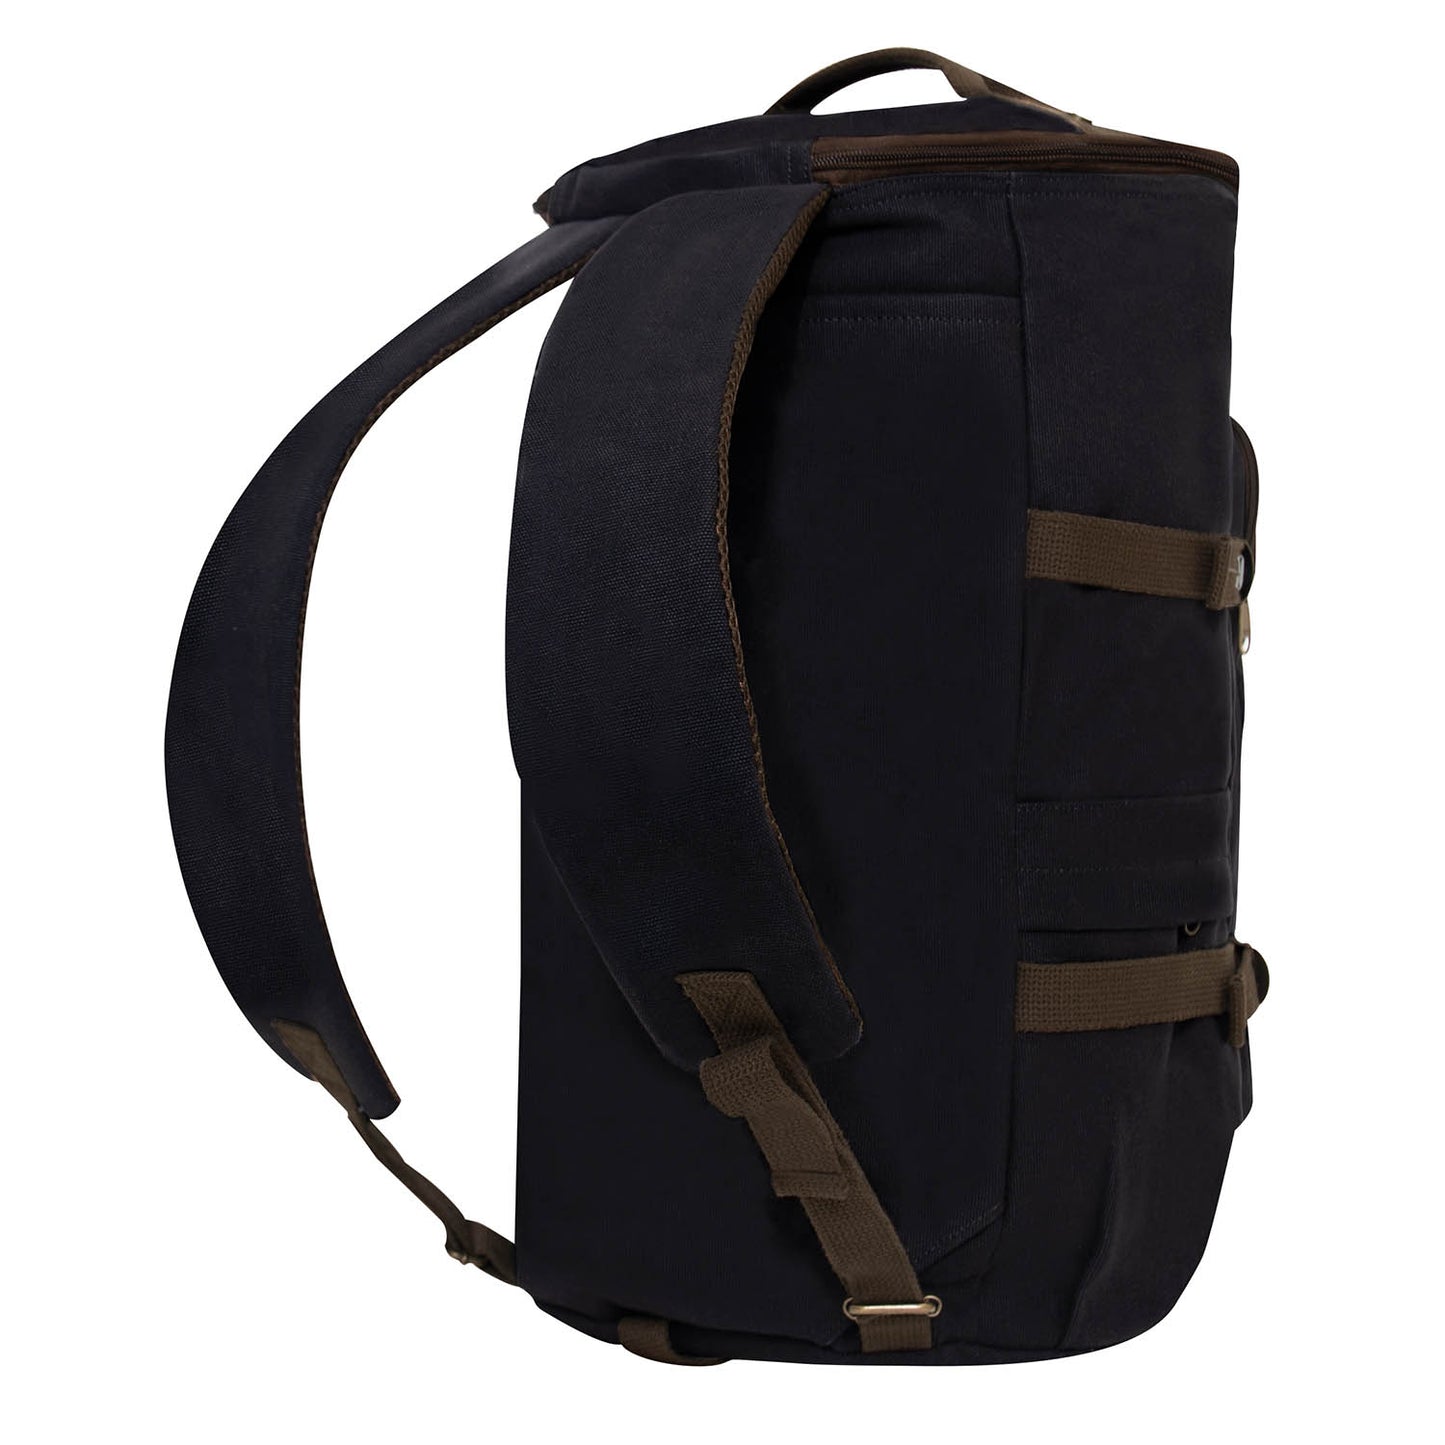 Rothco Convertible Canvas Duffle / Backpack